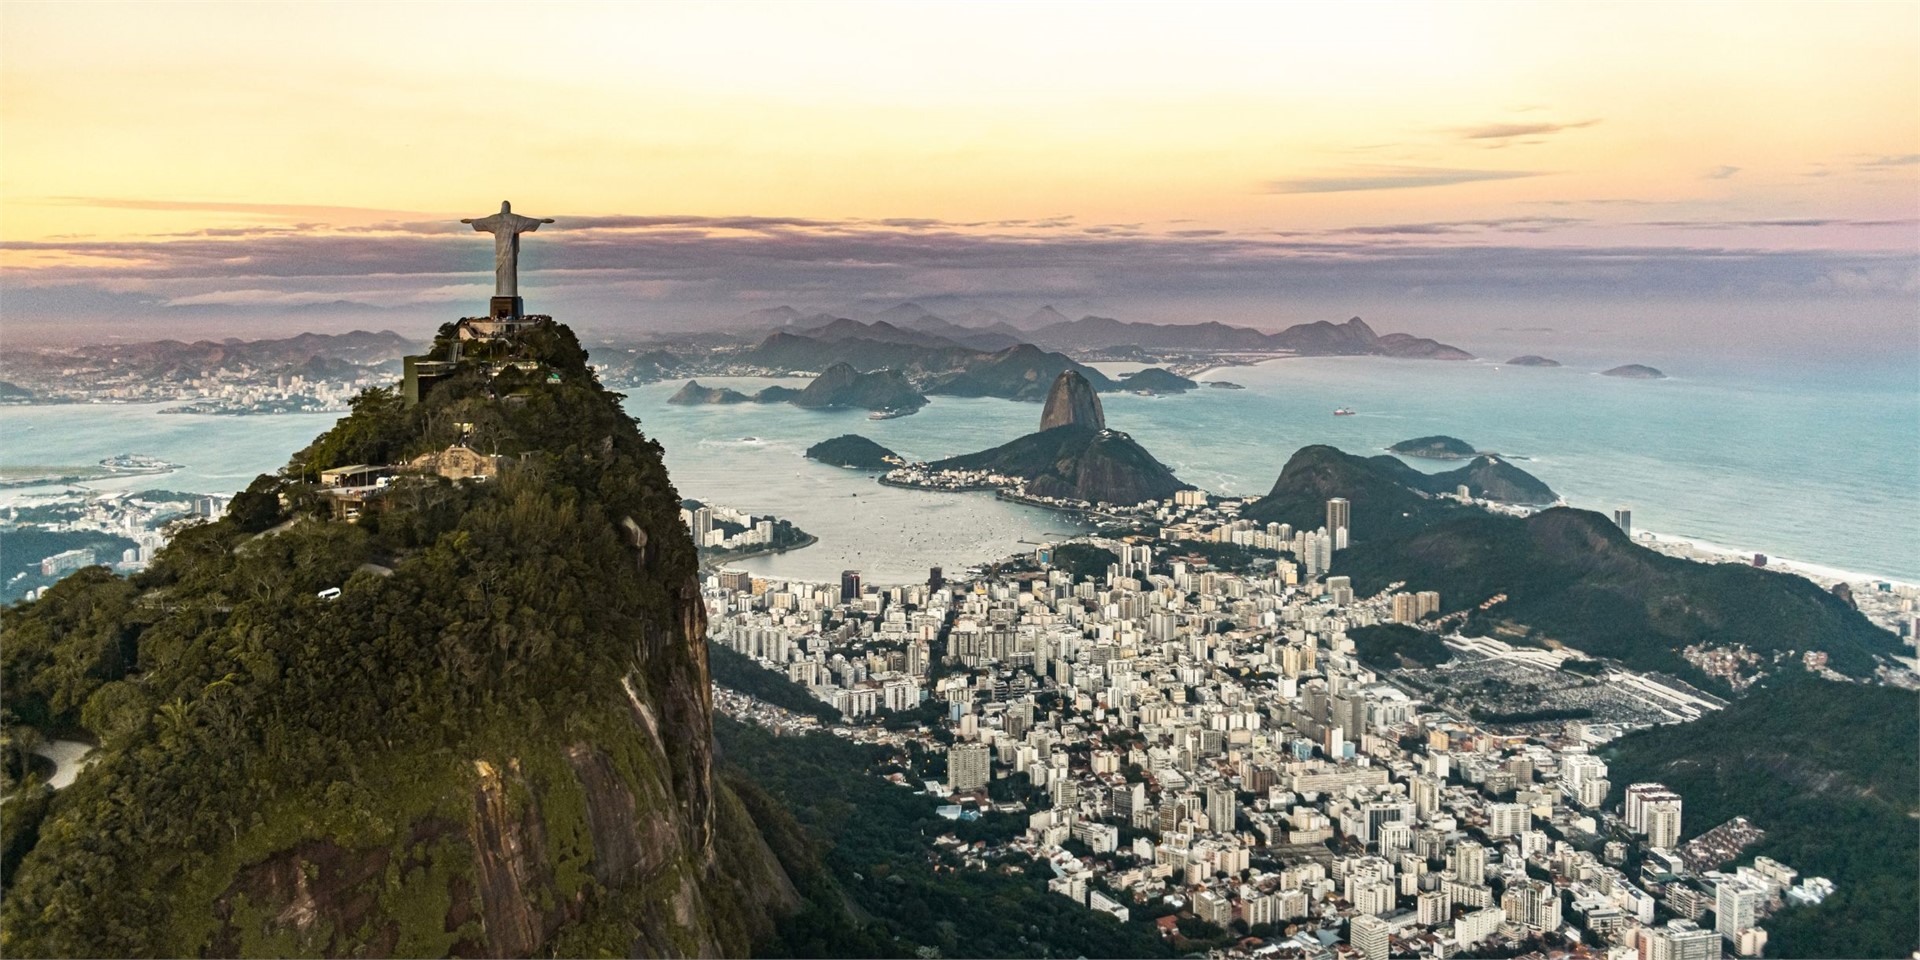 Book your trip to Sugarloaf Mountain in Rio de Janeiro